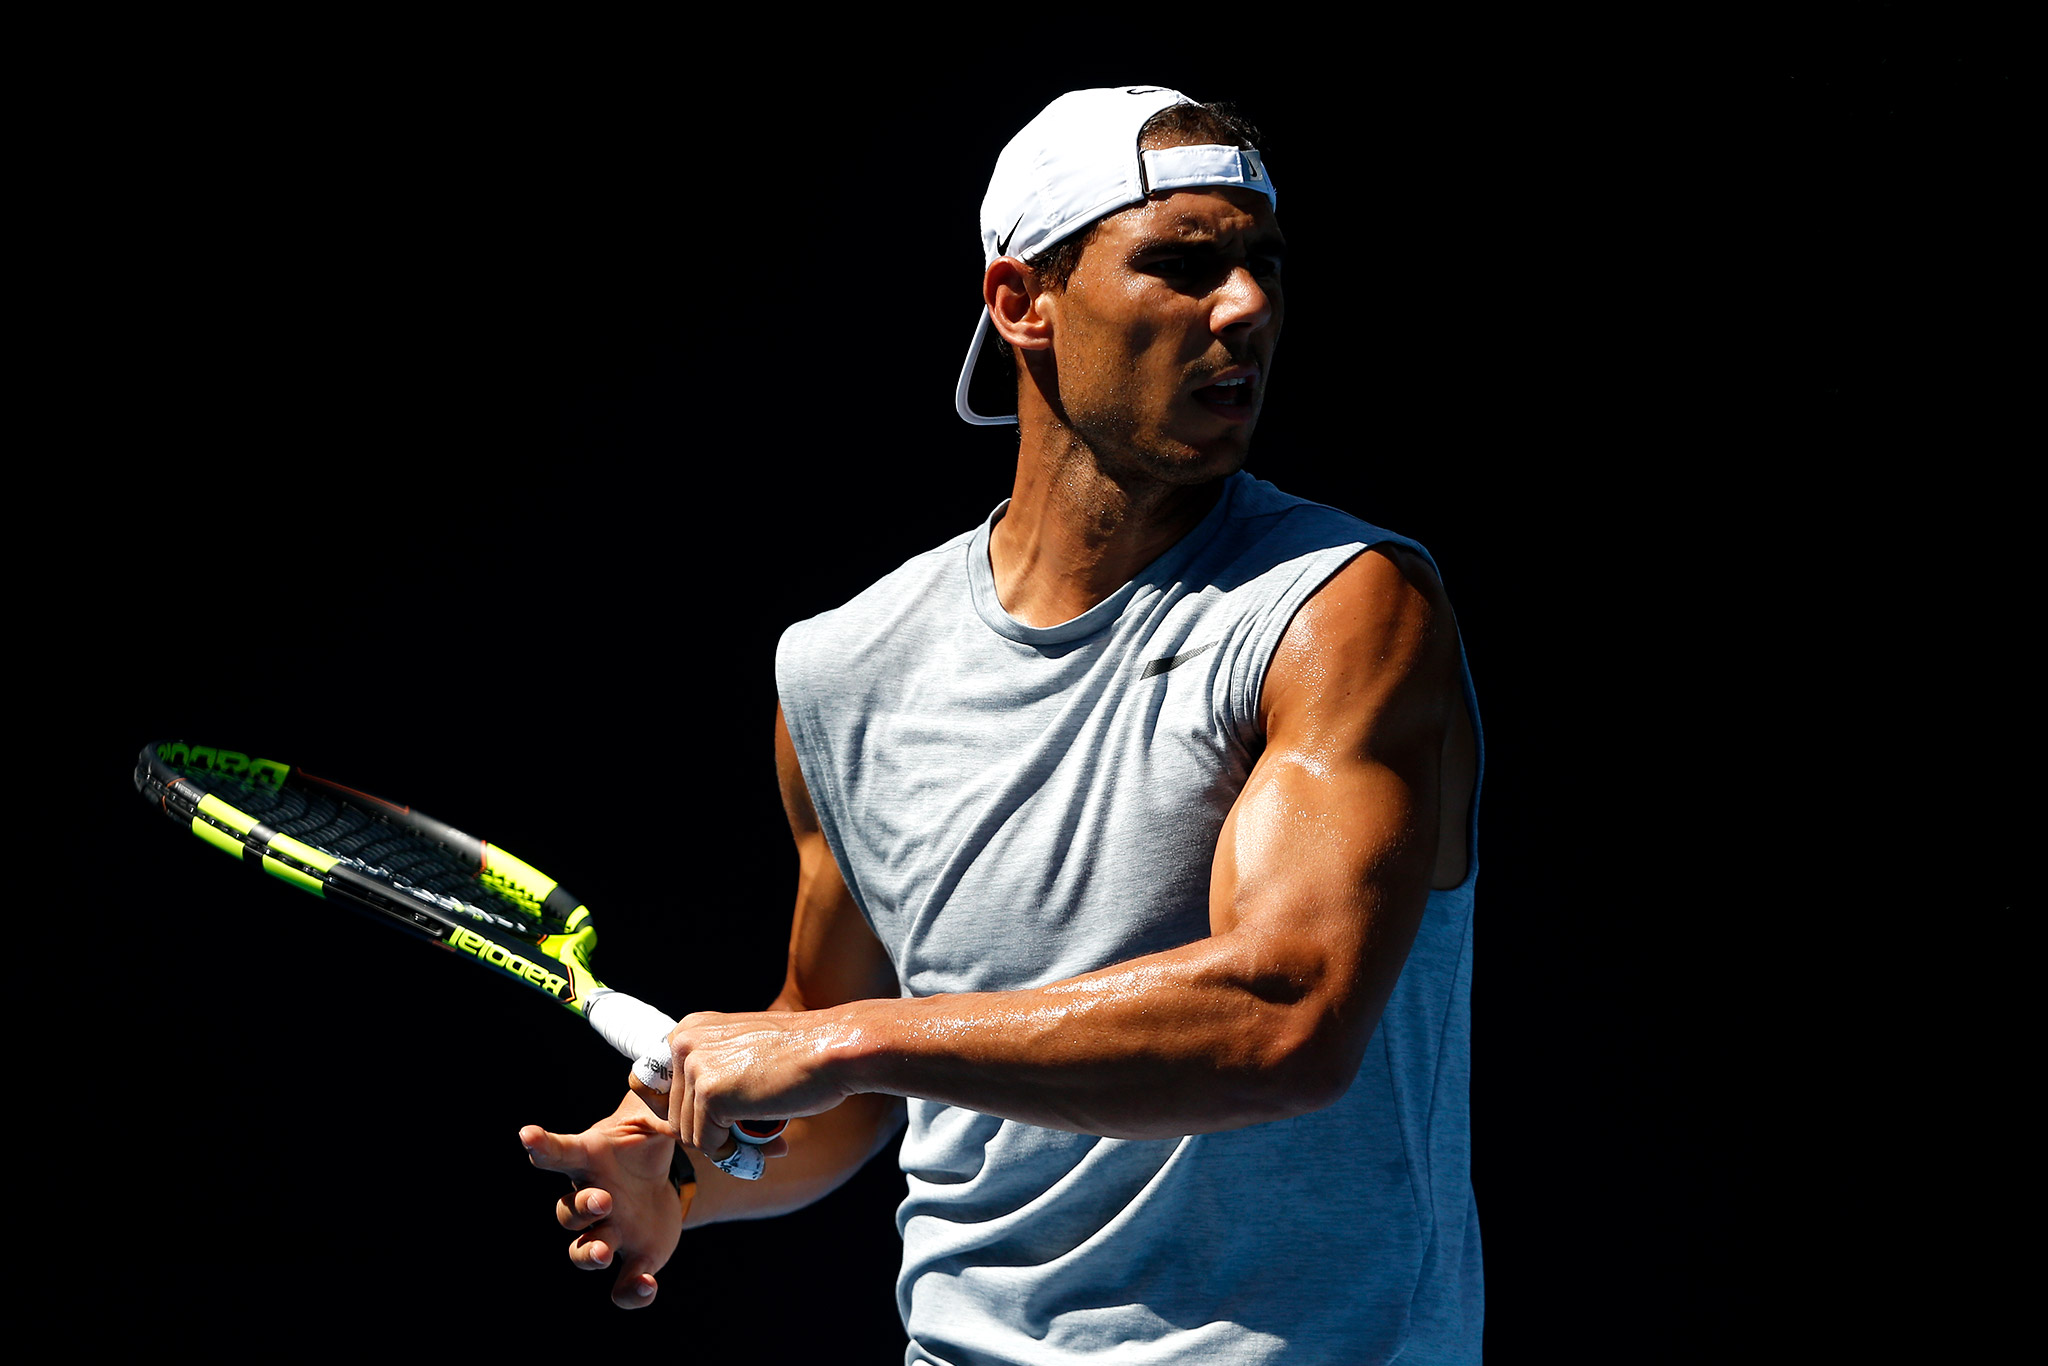 Rafael Nadal rises 3 places in ATP World Tour rankings – Rafael Nadal Fans